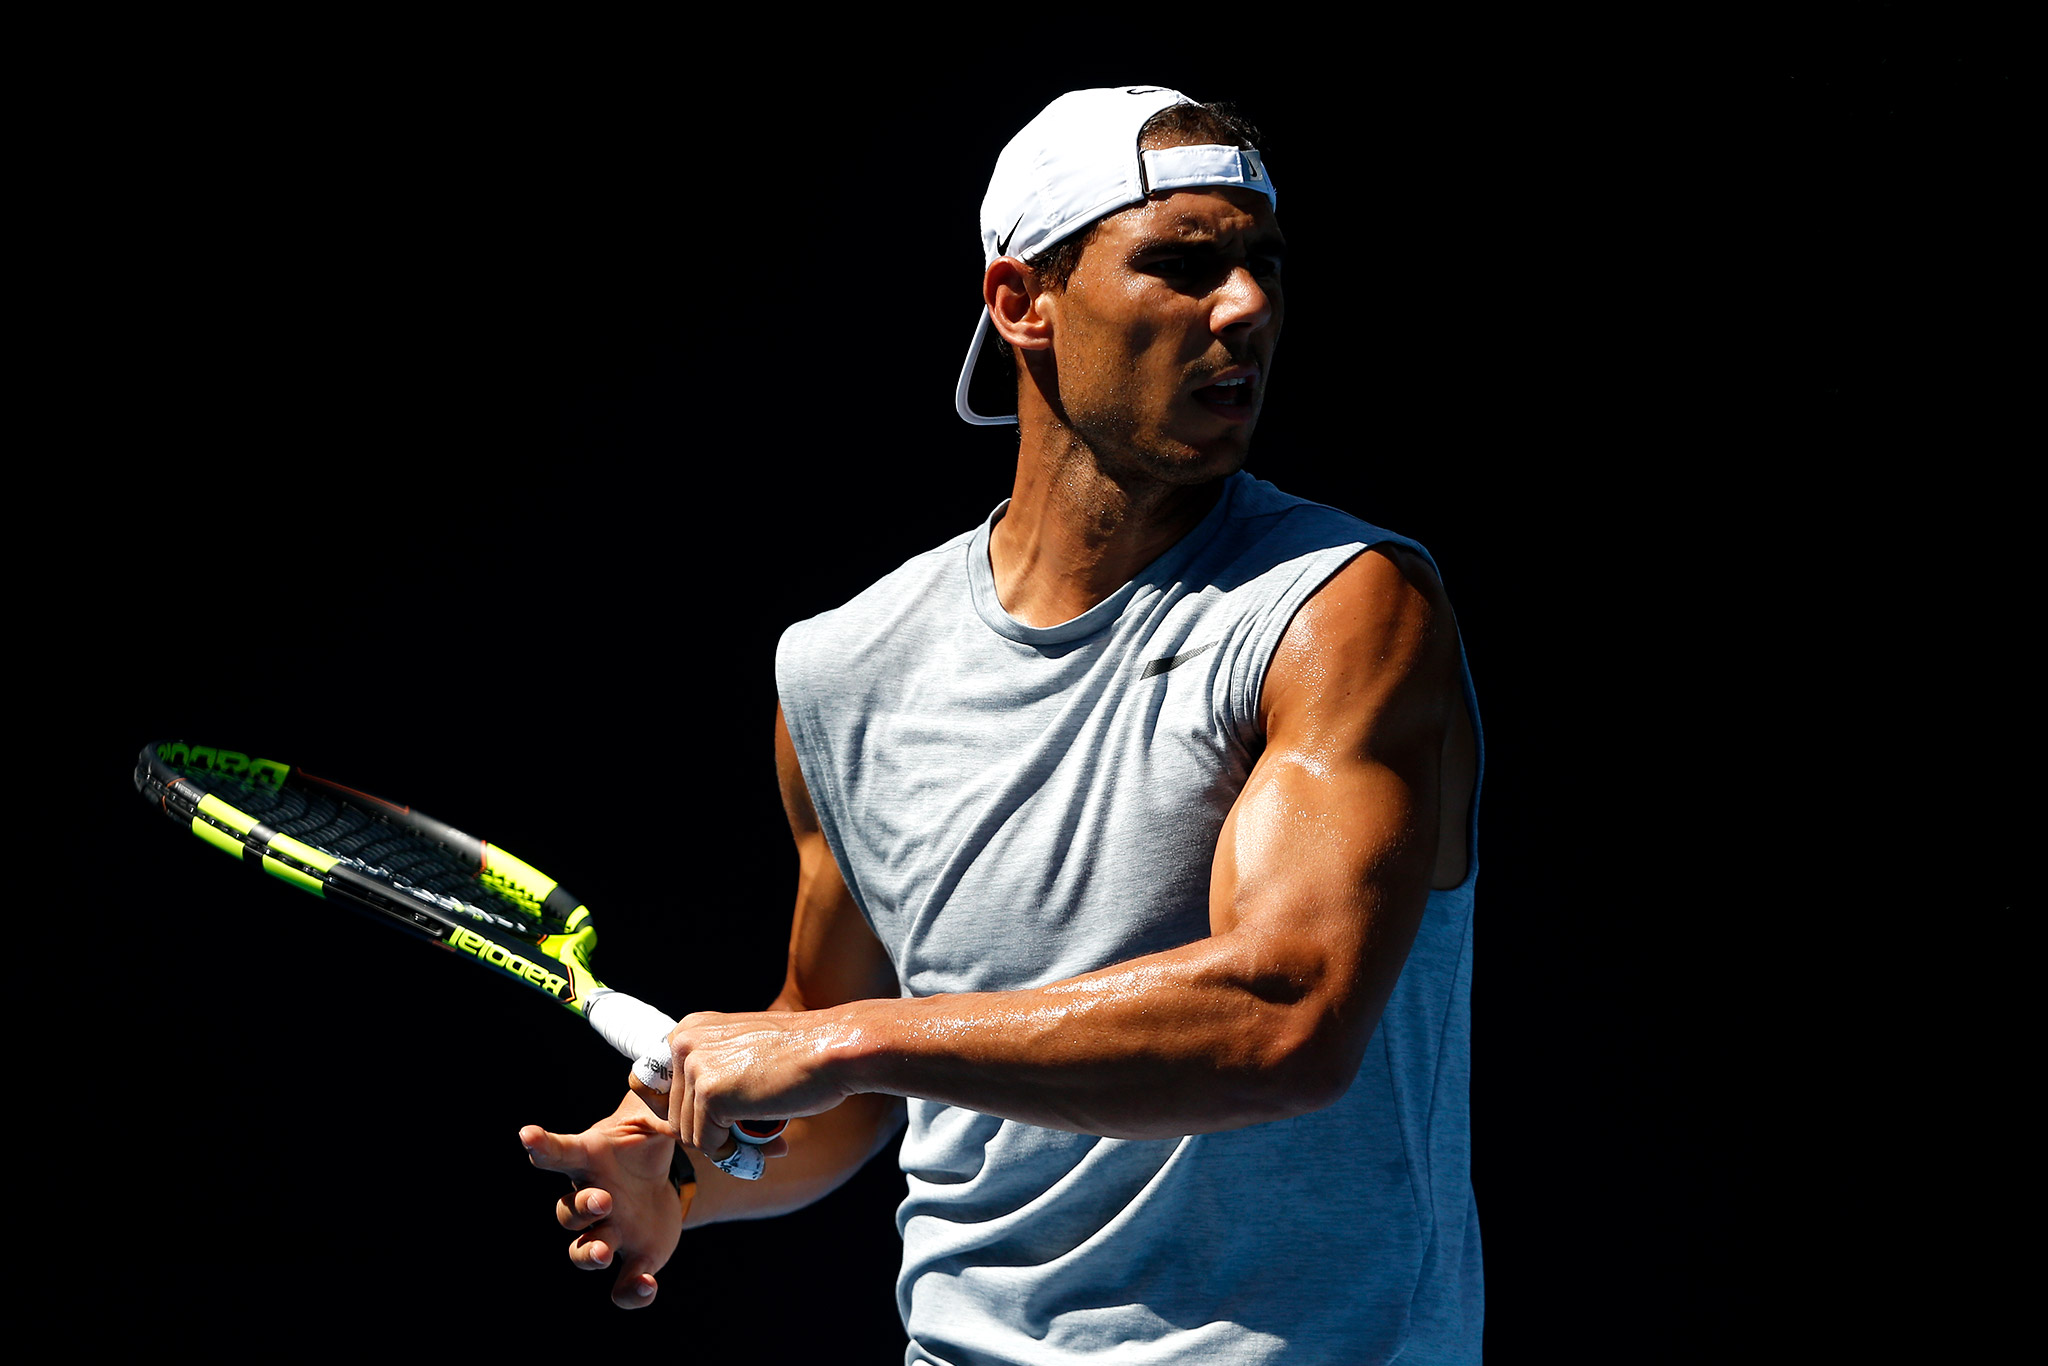 Rafael Nadal rises 3 places in ATP World Tour rankings – Rafael Nadal Fans